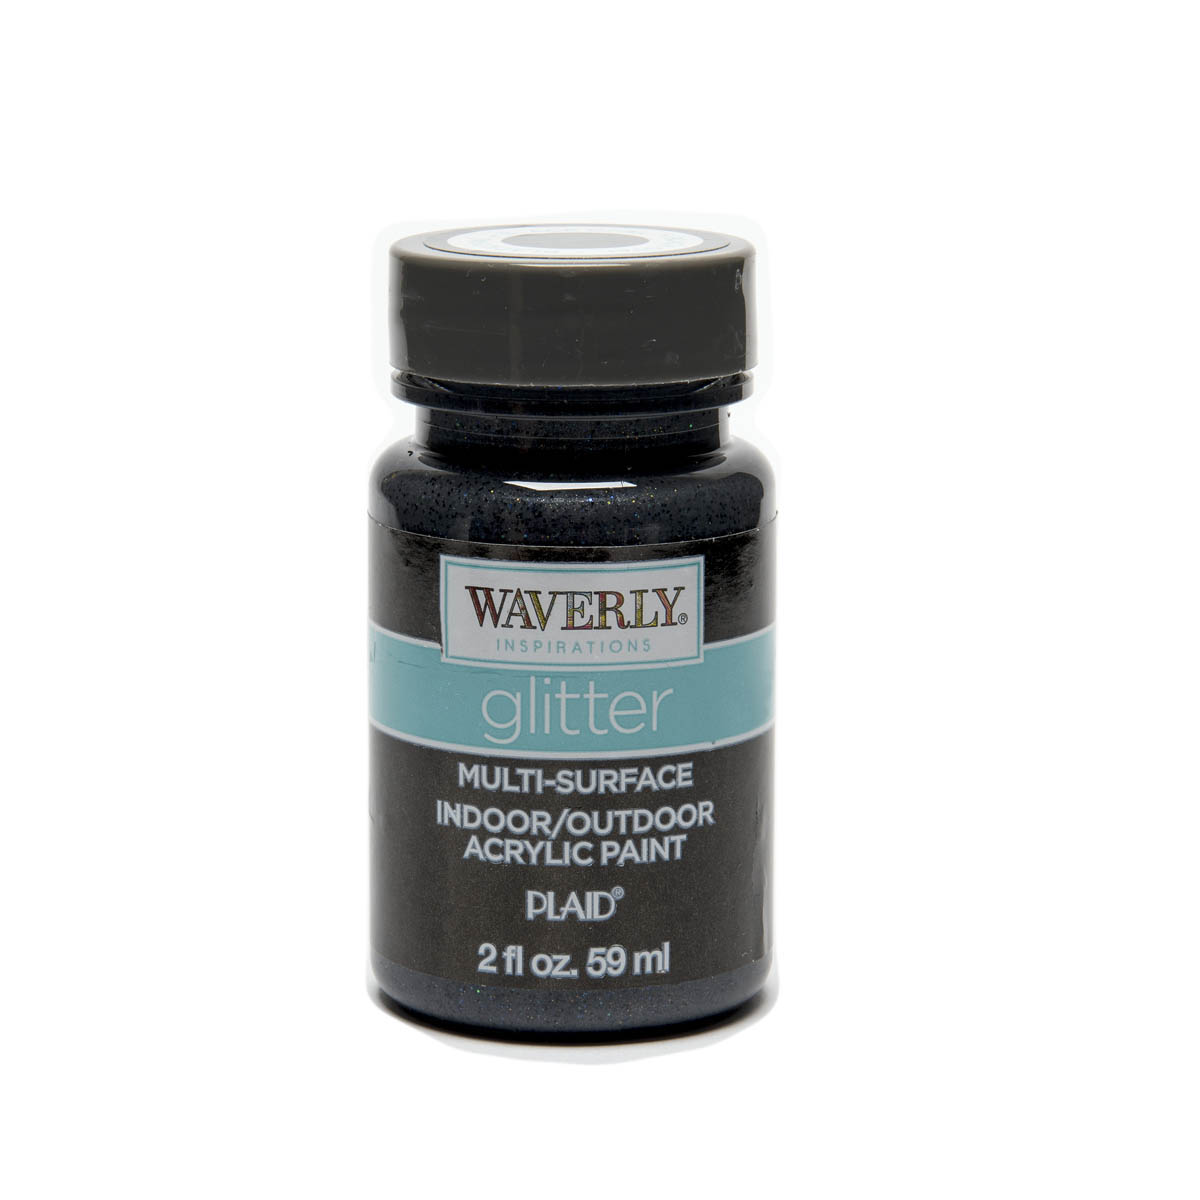 Waverly ® Inspirations Glitter Multi-Surface Acrylic Paint - Black Opal, 2 oz. - 60940E